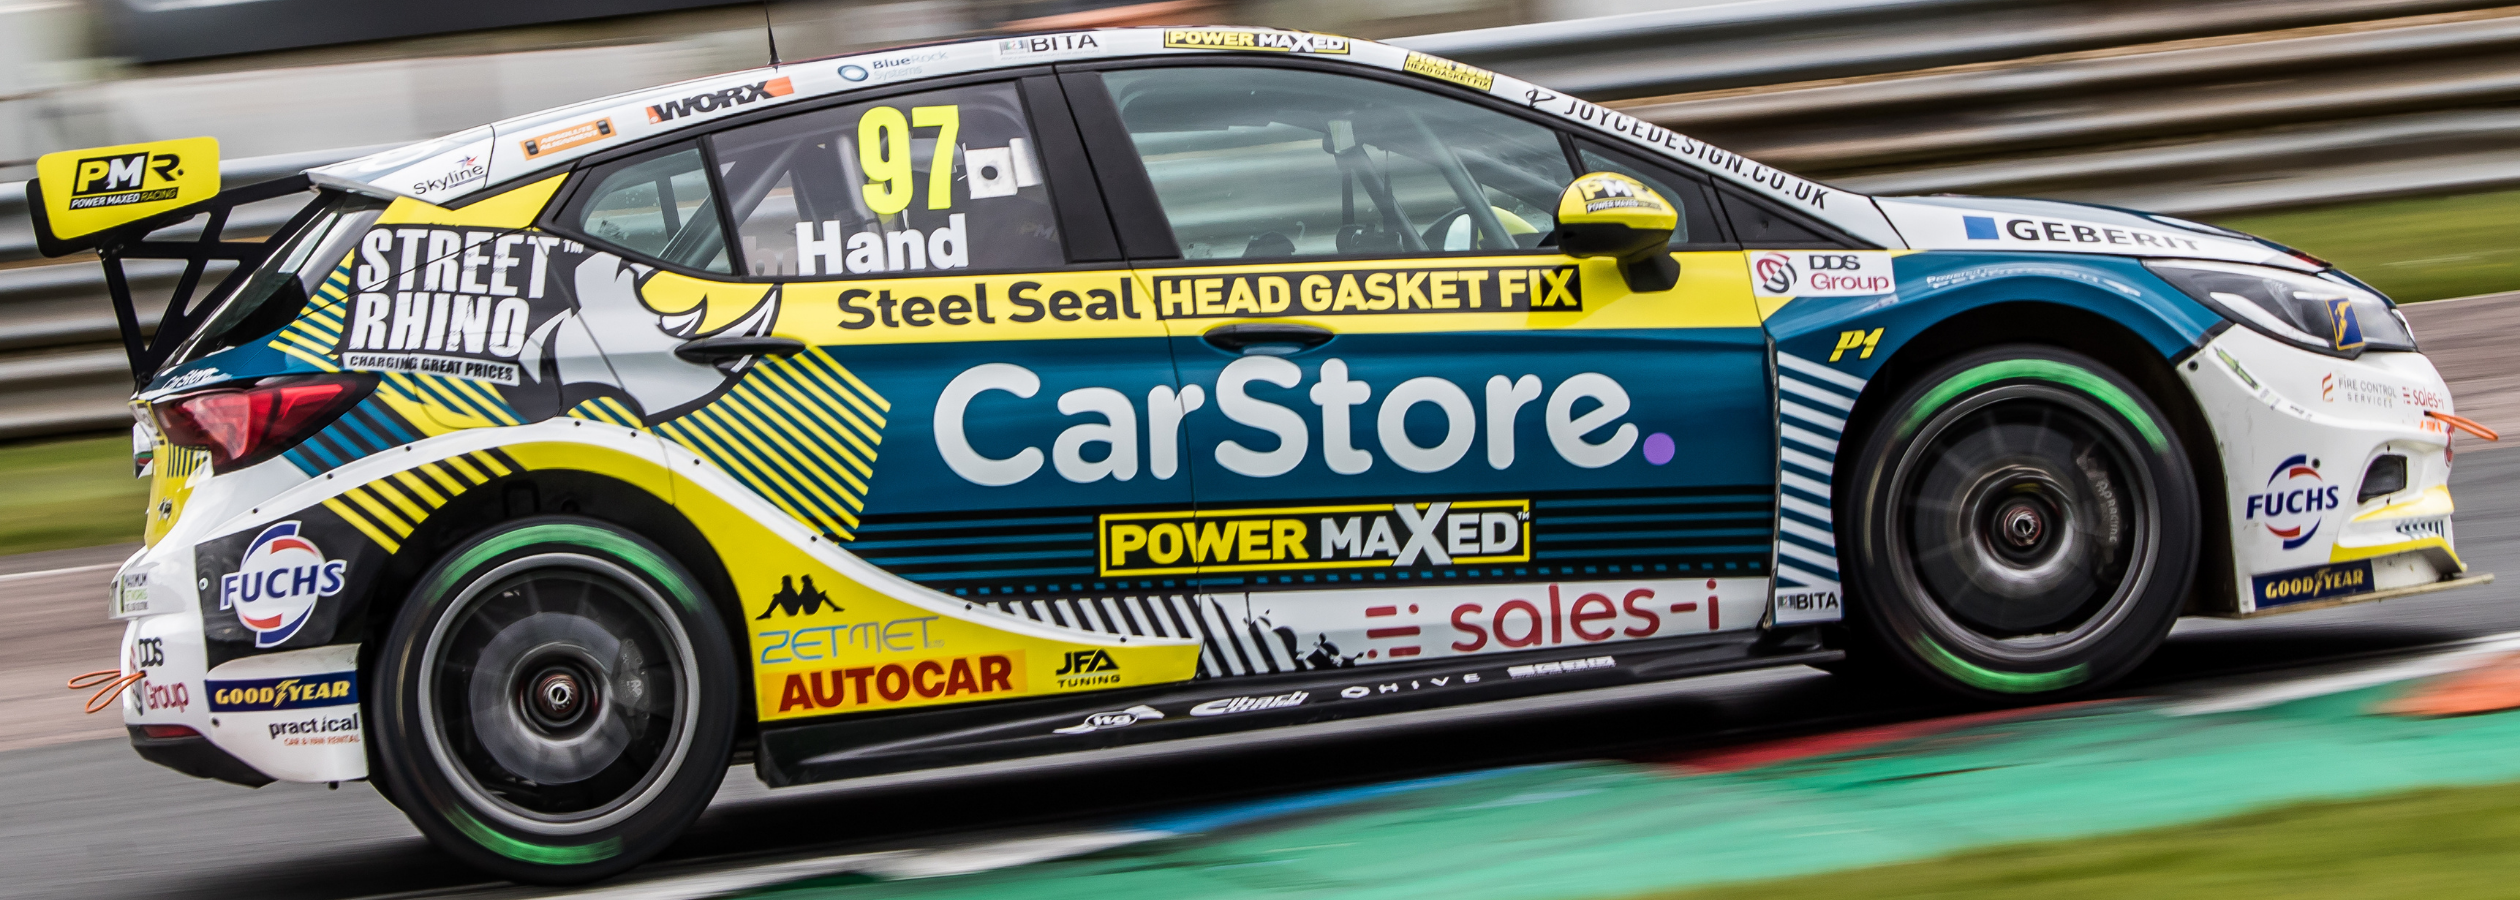 sales-i's sponsorship of Power Maxed Racing for the BTCC 2022 season